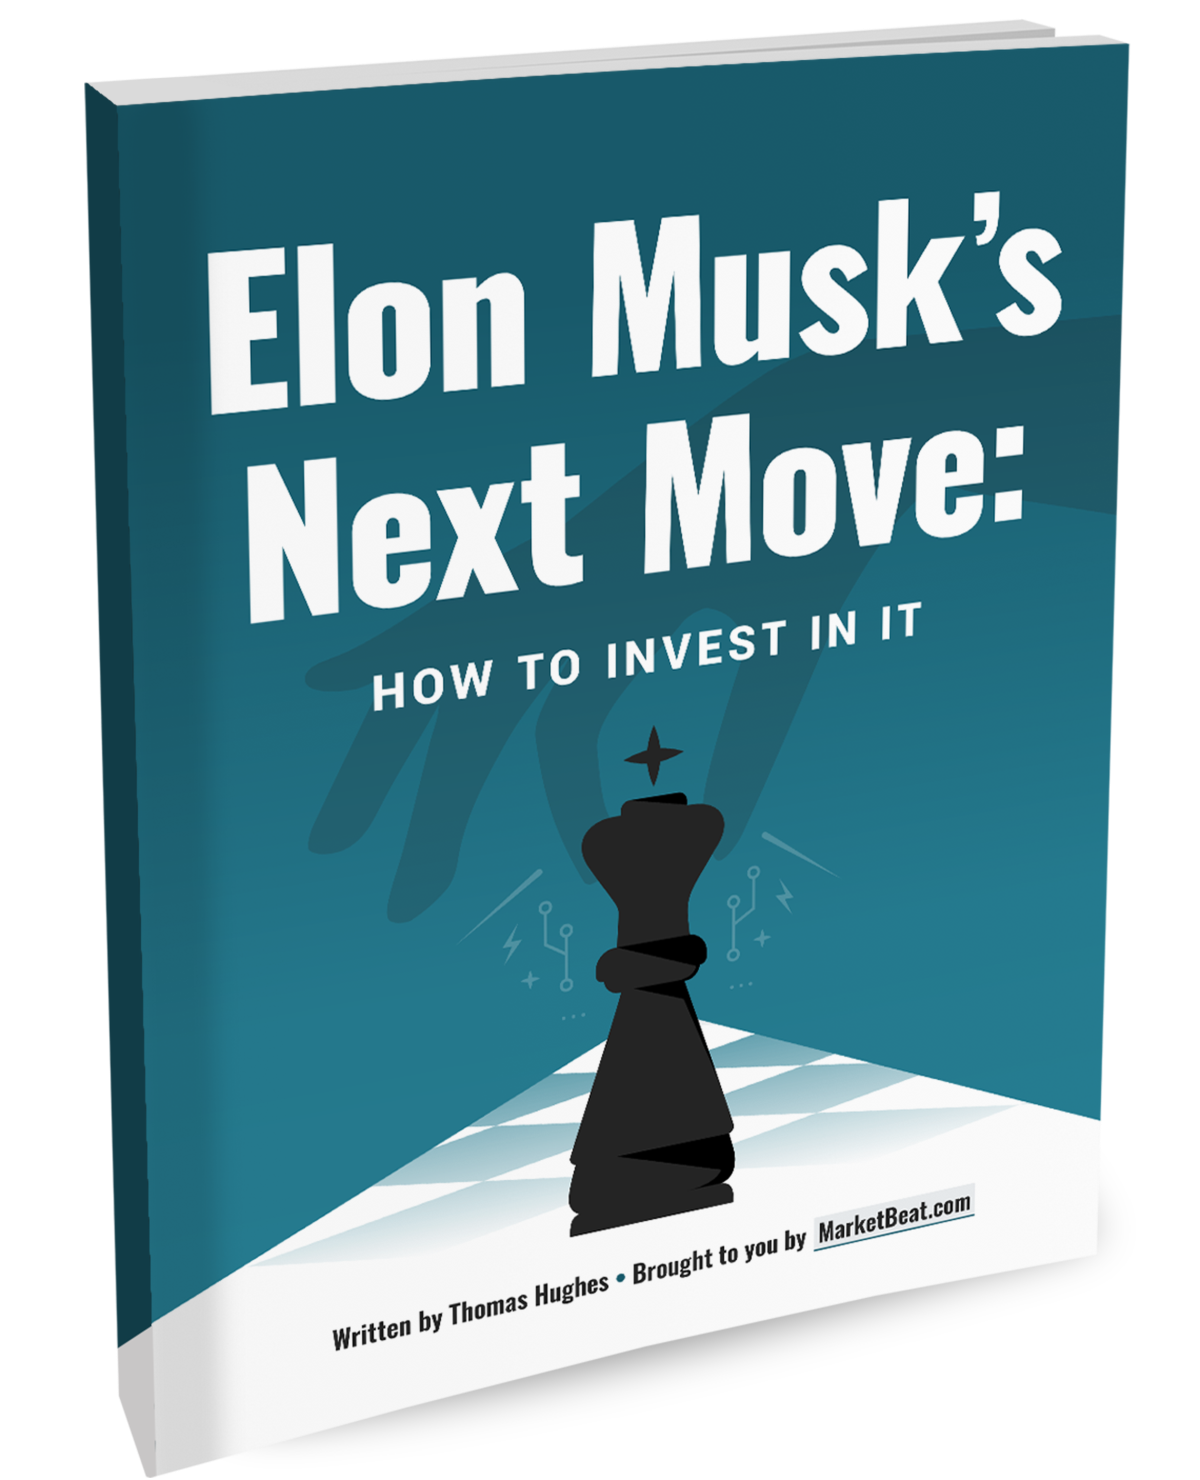 La próxima portada en movimiento de Elon Musk